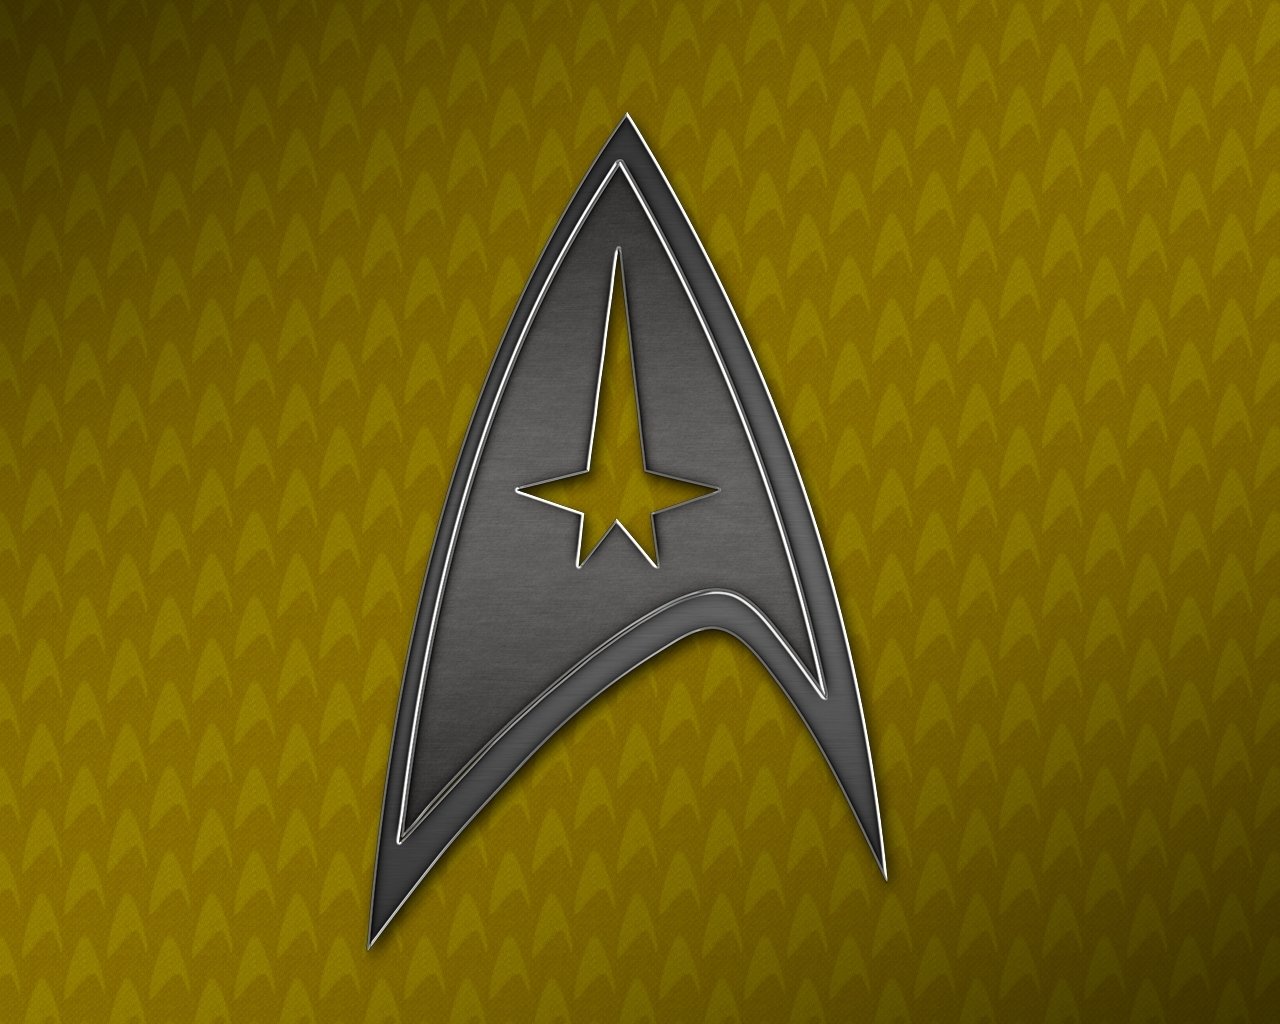 Star Trek 2009 images Star Trek Command Insignia HD wallpaper and